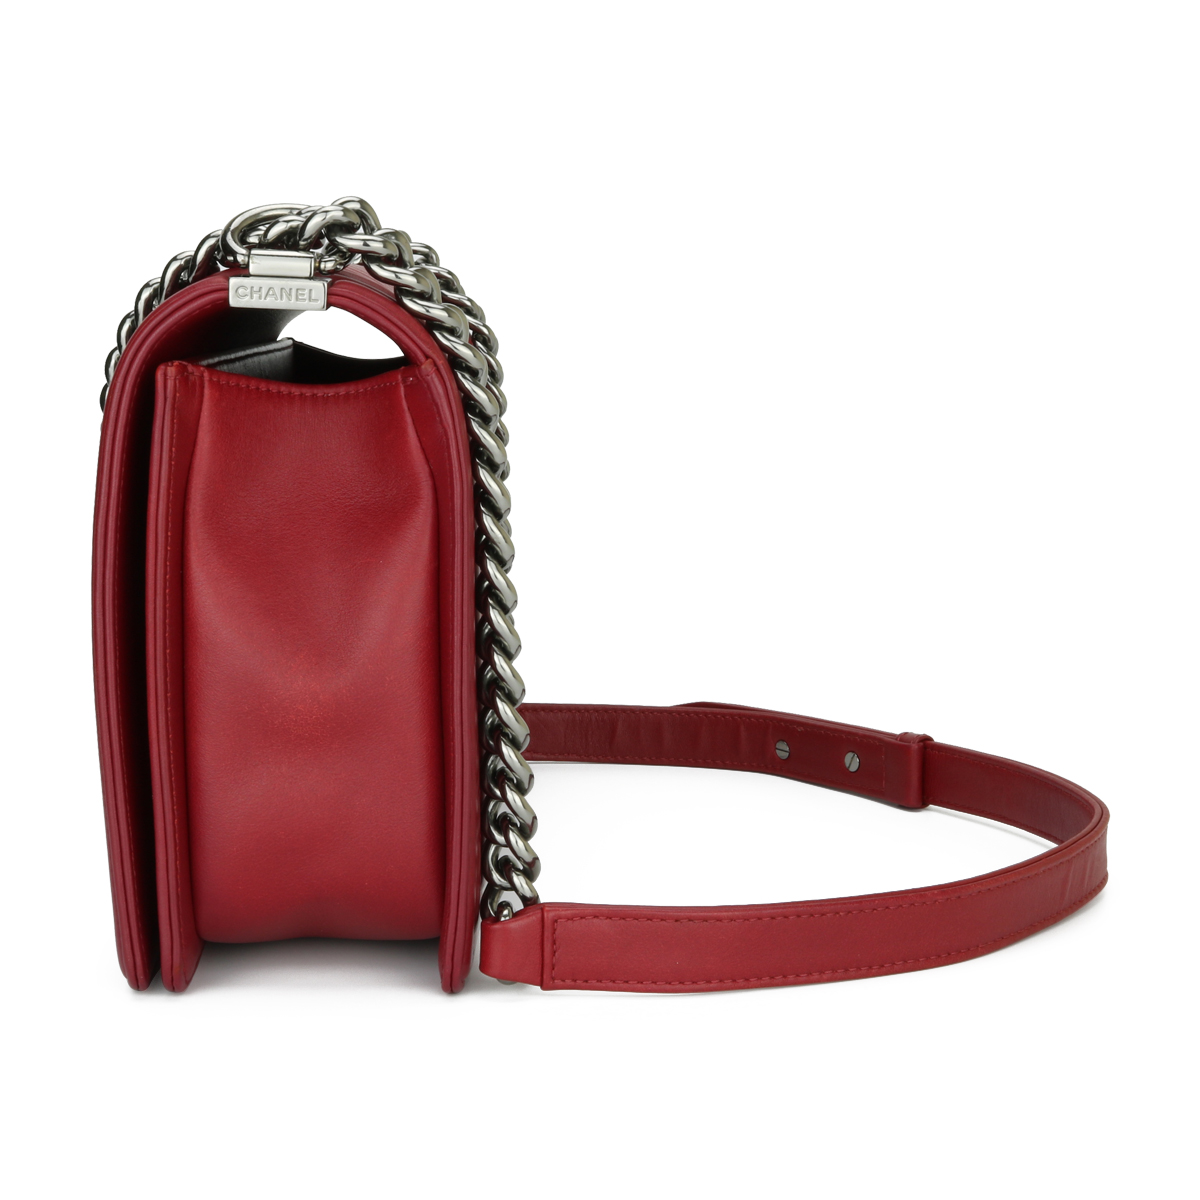 Chanel Chevron Gabrielle Hobo Bag Red